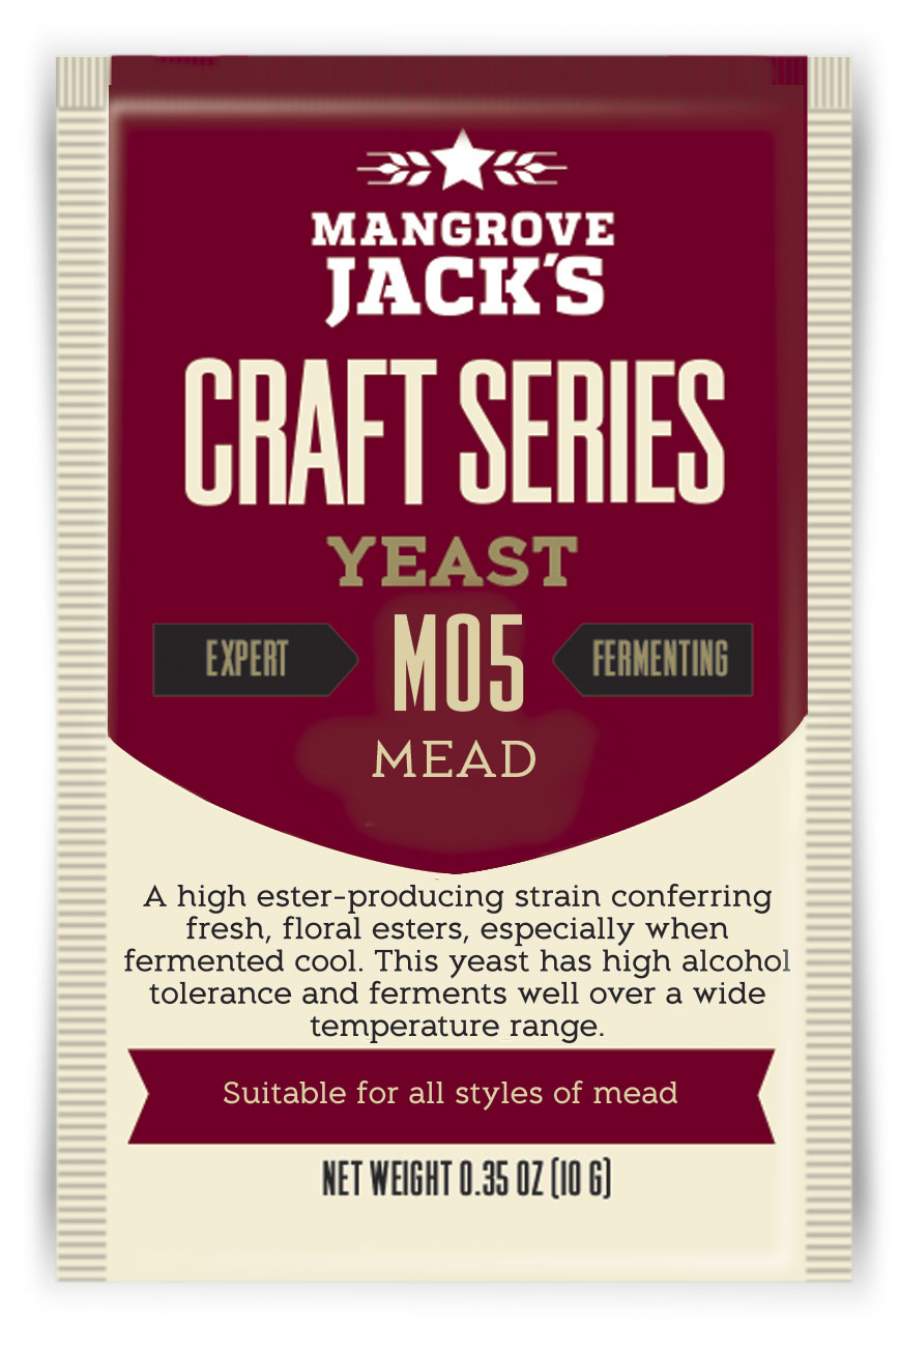 Mead - Mangrove Jack's Craft Series - 10 g - Кликнете на изображението, за да го затворите